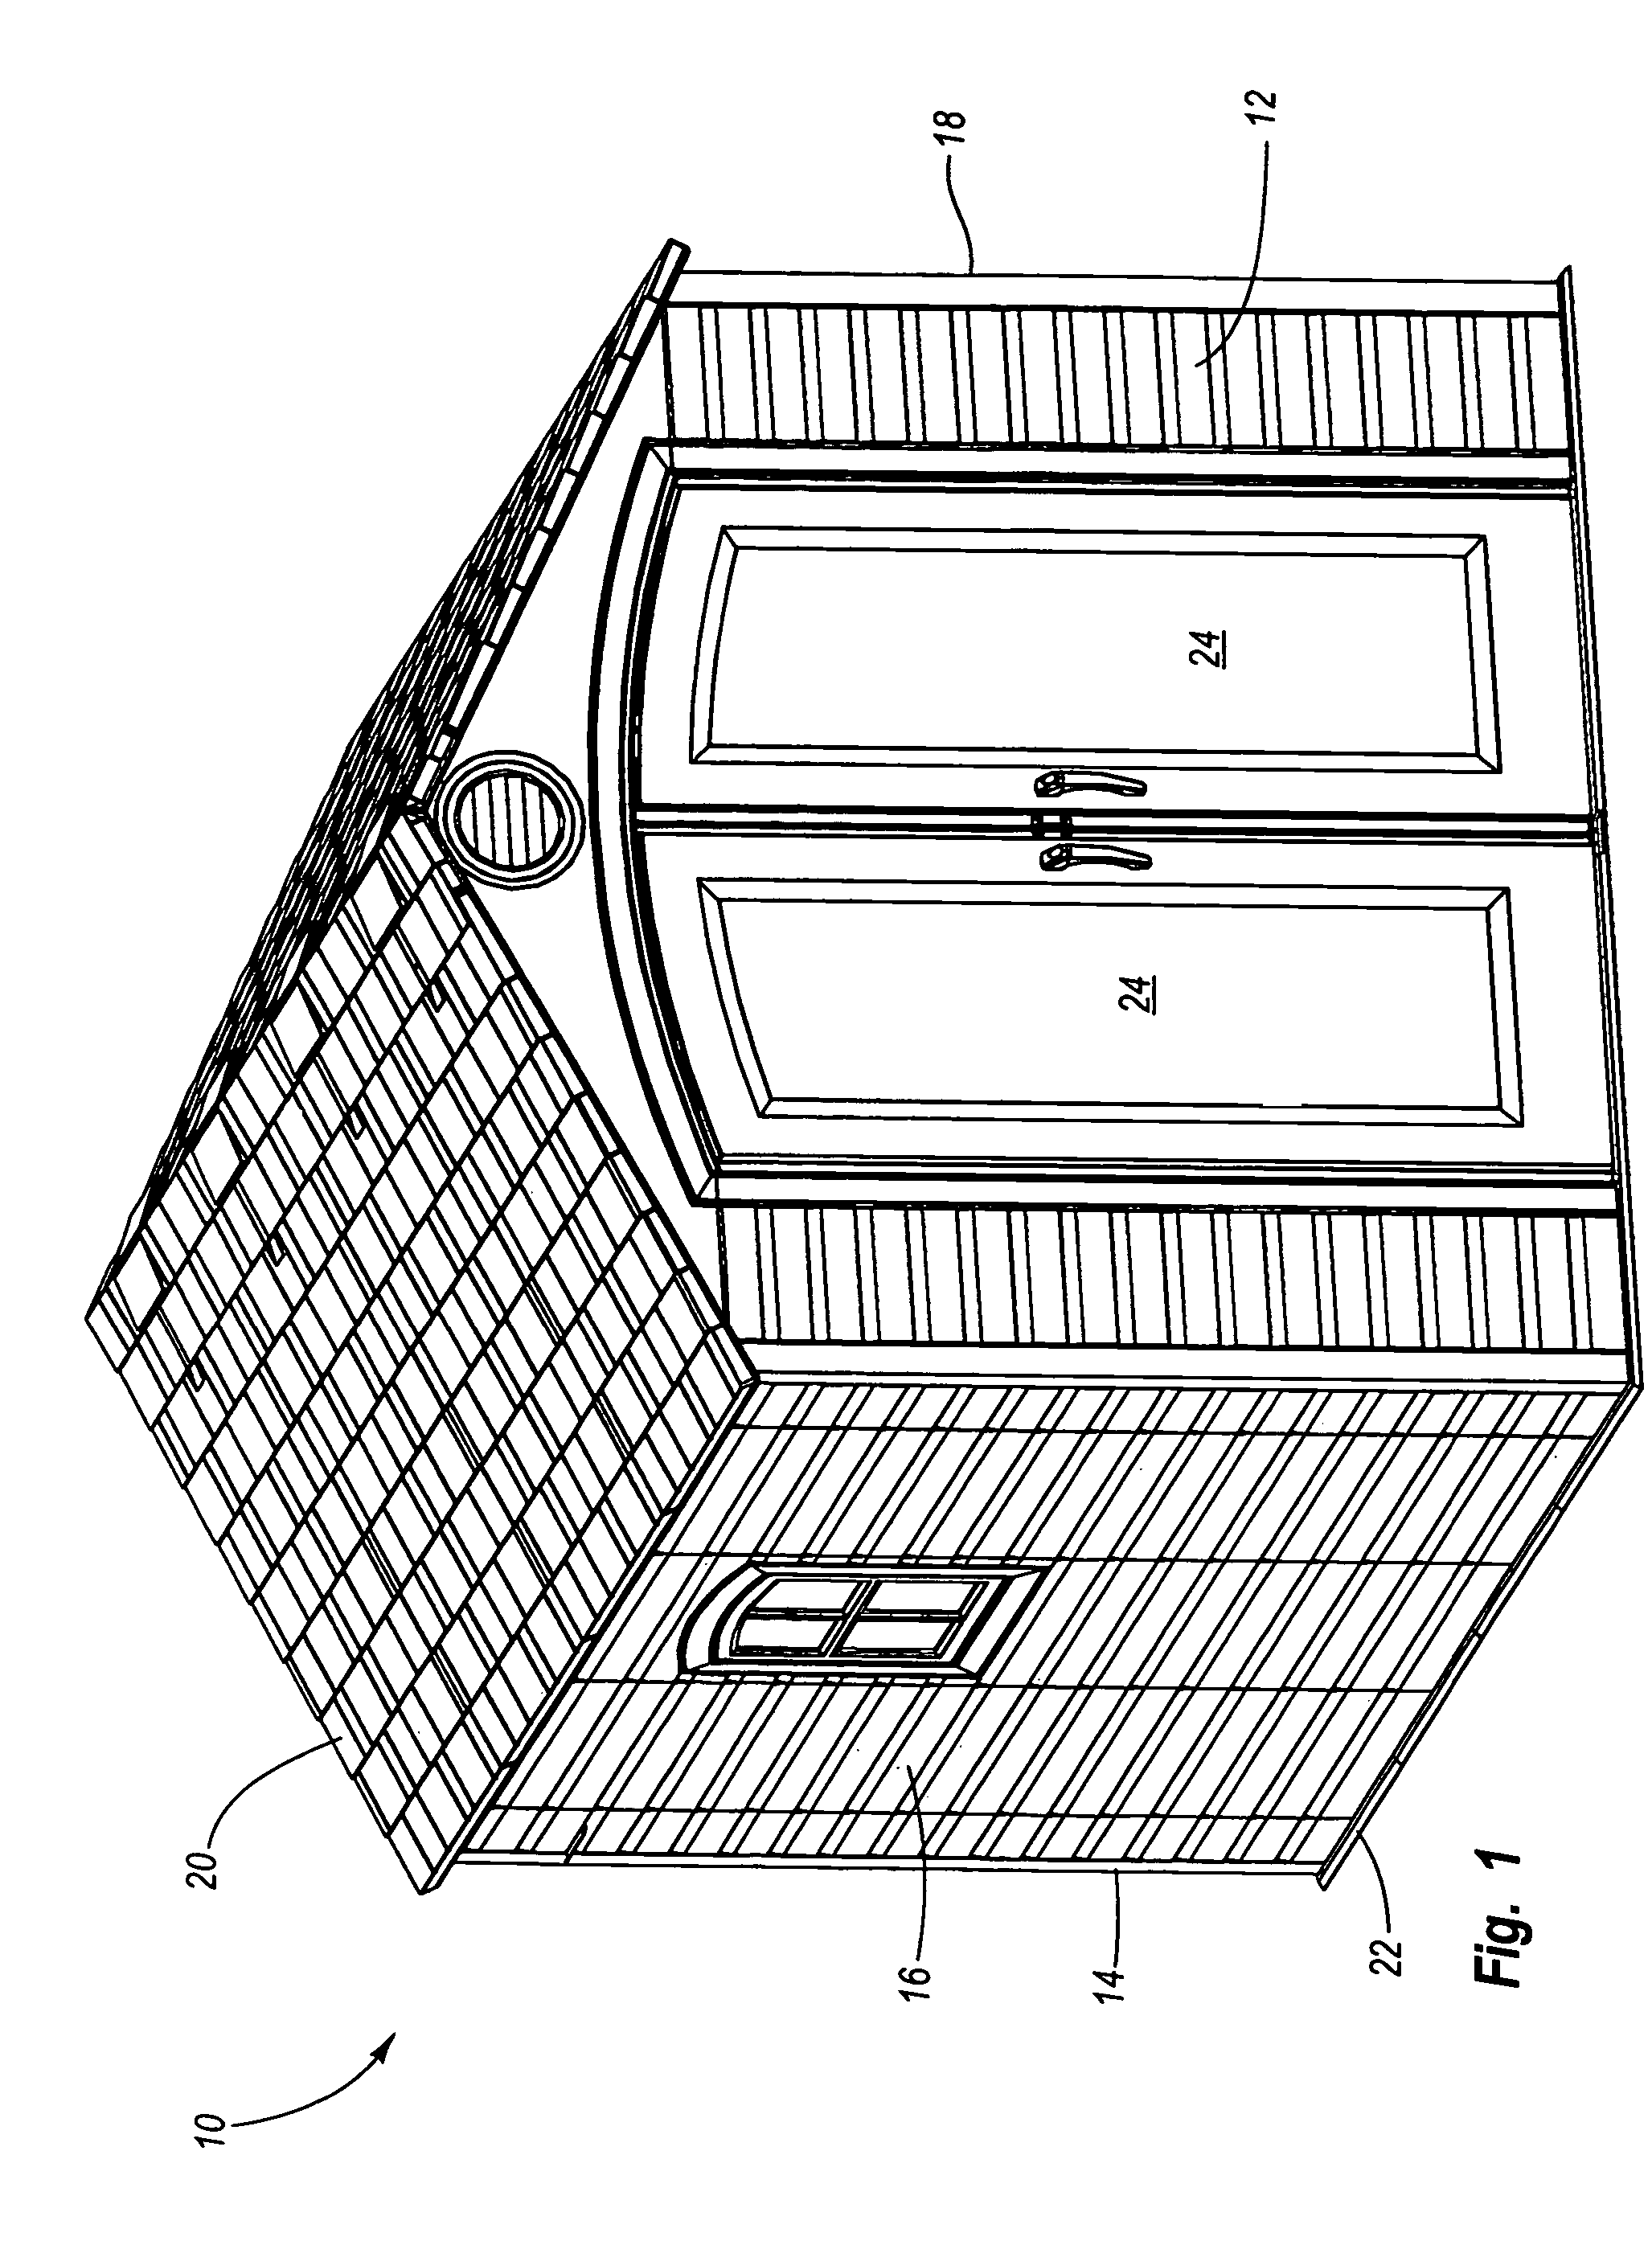 Modular enclosure